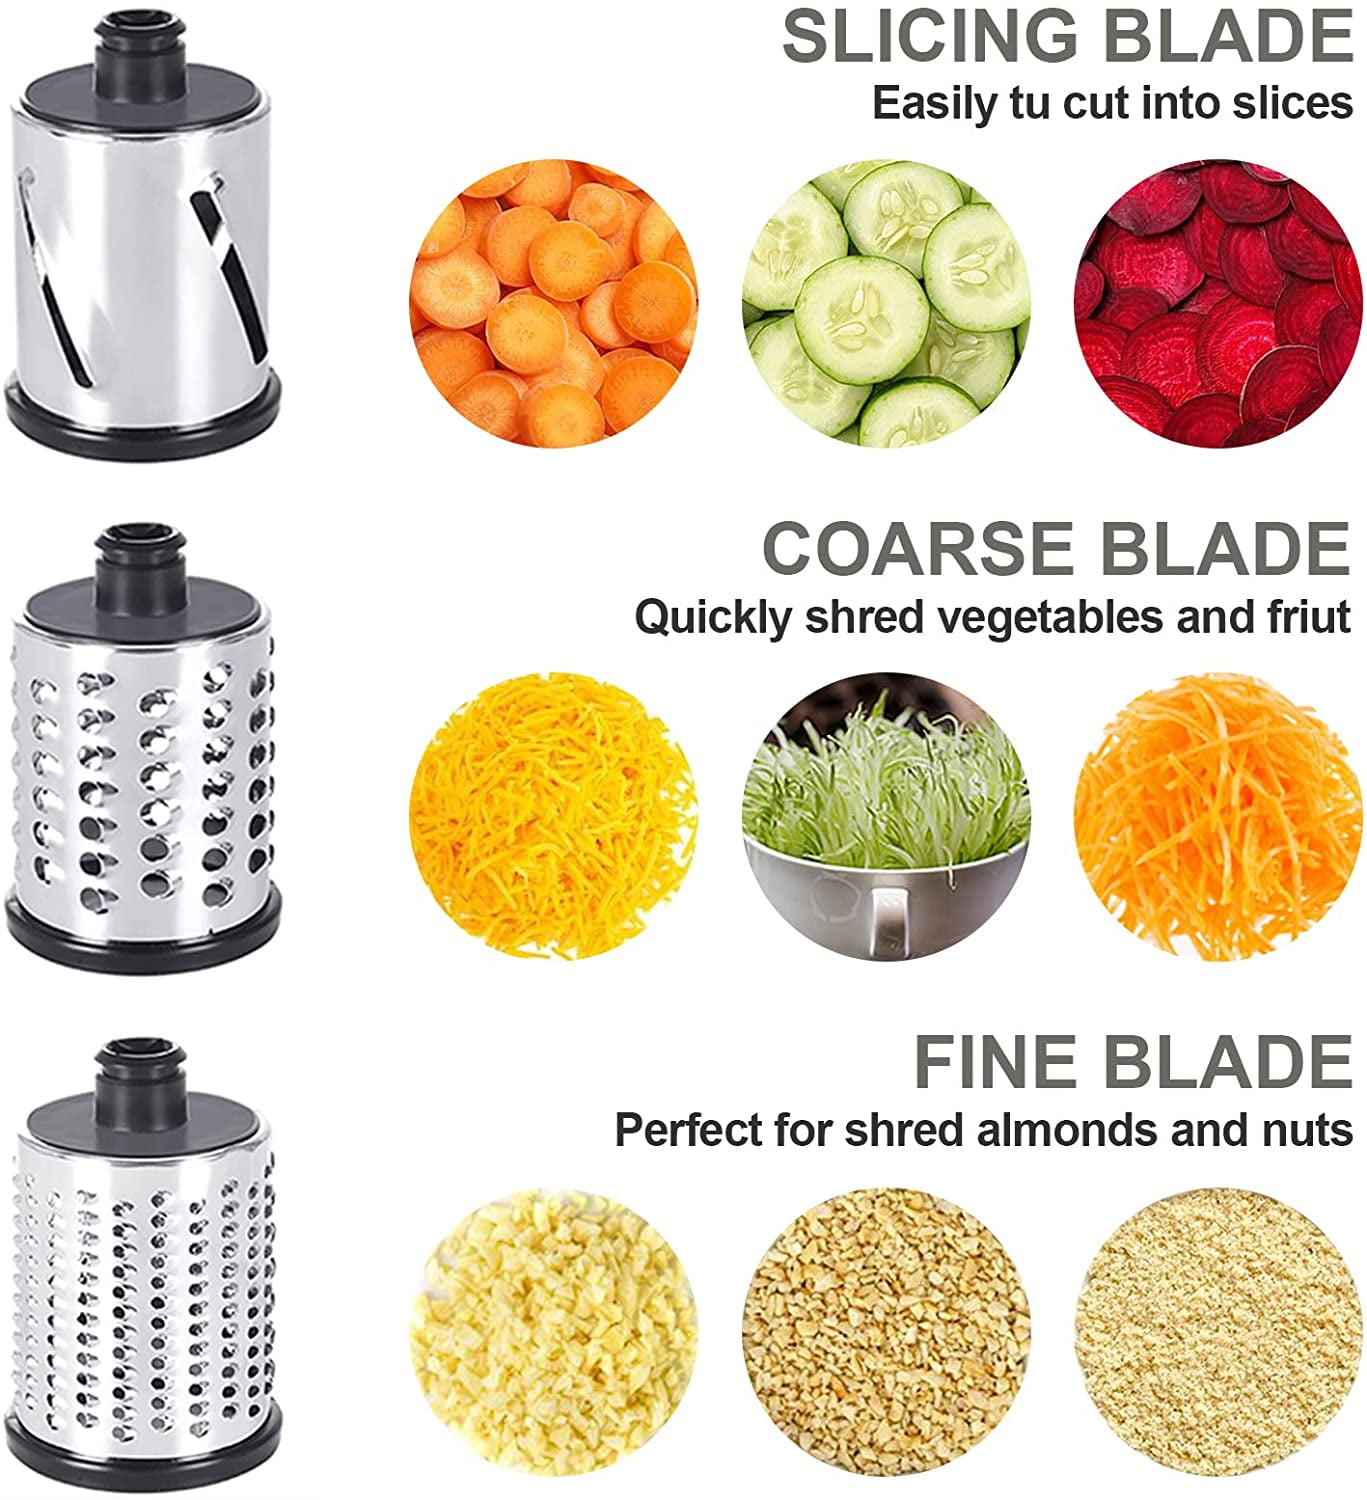 Slicer Shredder Attachments for KitchenAid Stand Mixer Cheese Grater  Attachment for KitchenAid, Slicer Accessories with 3 Blades by InnoMoon